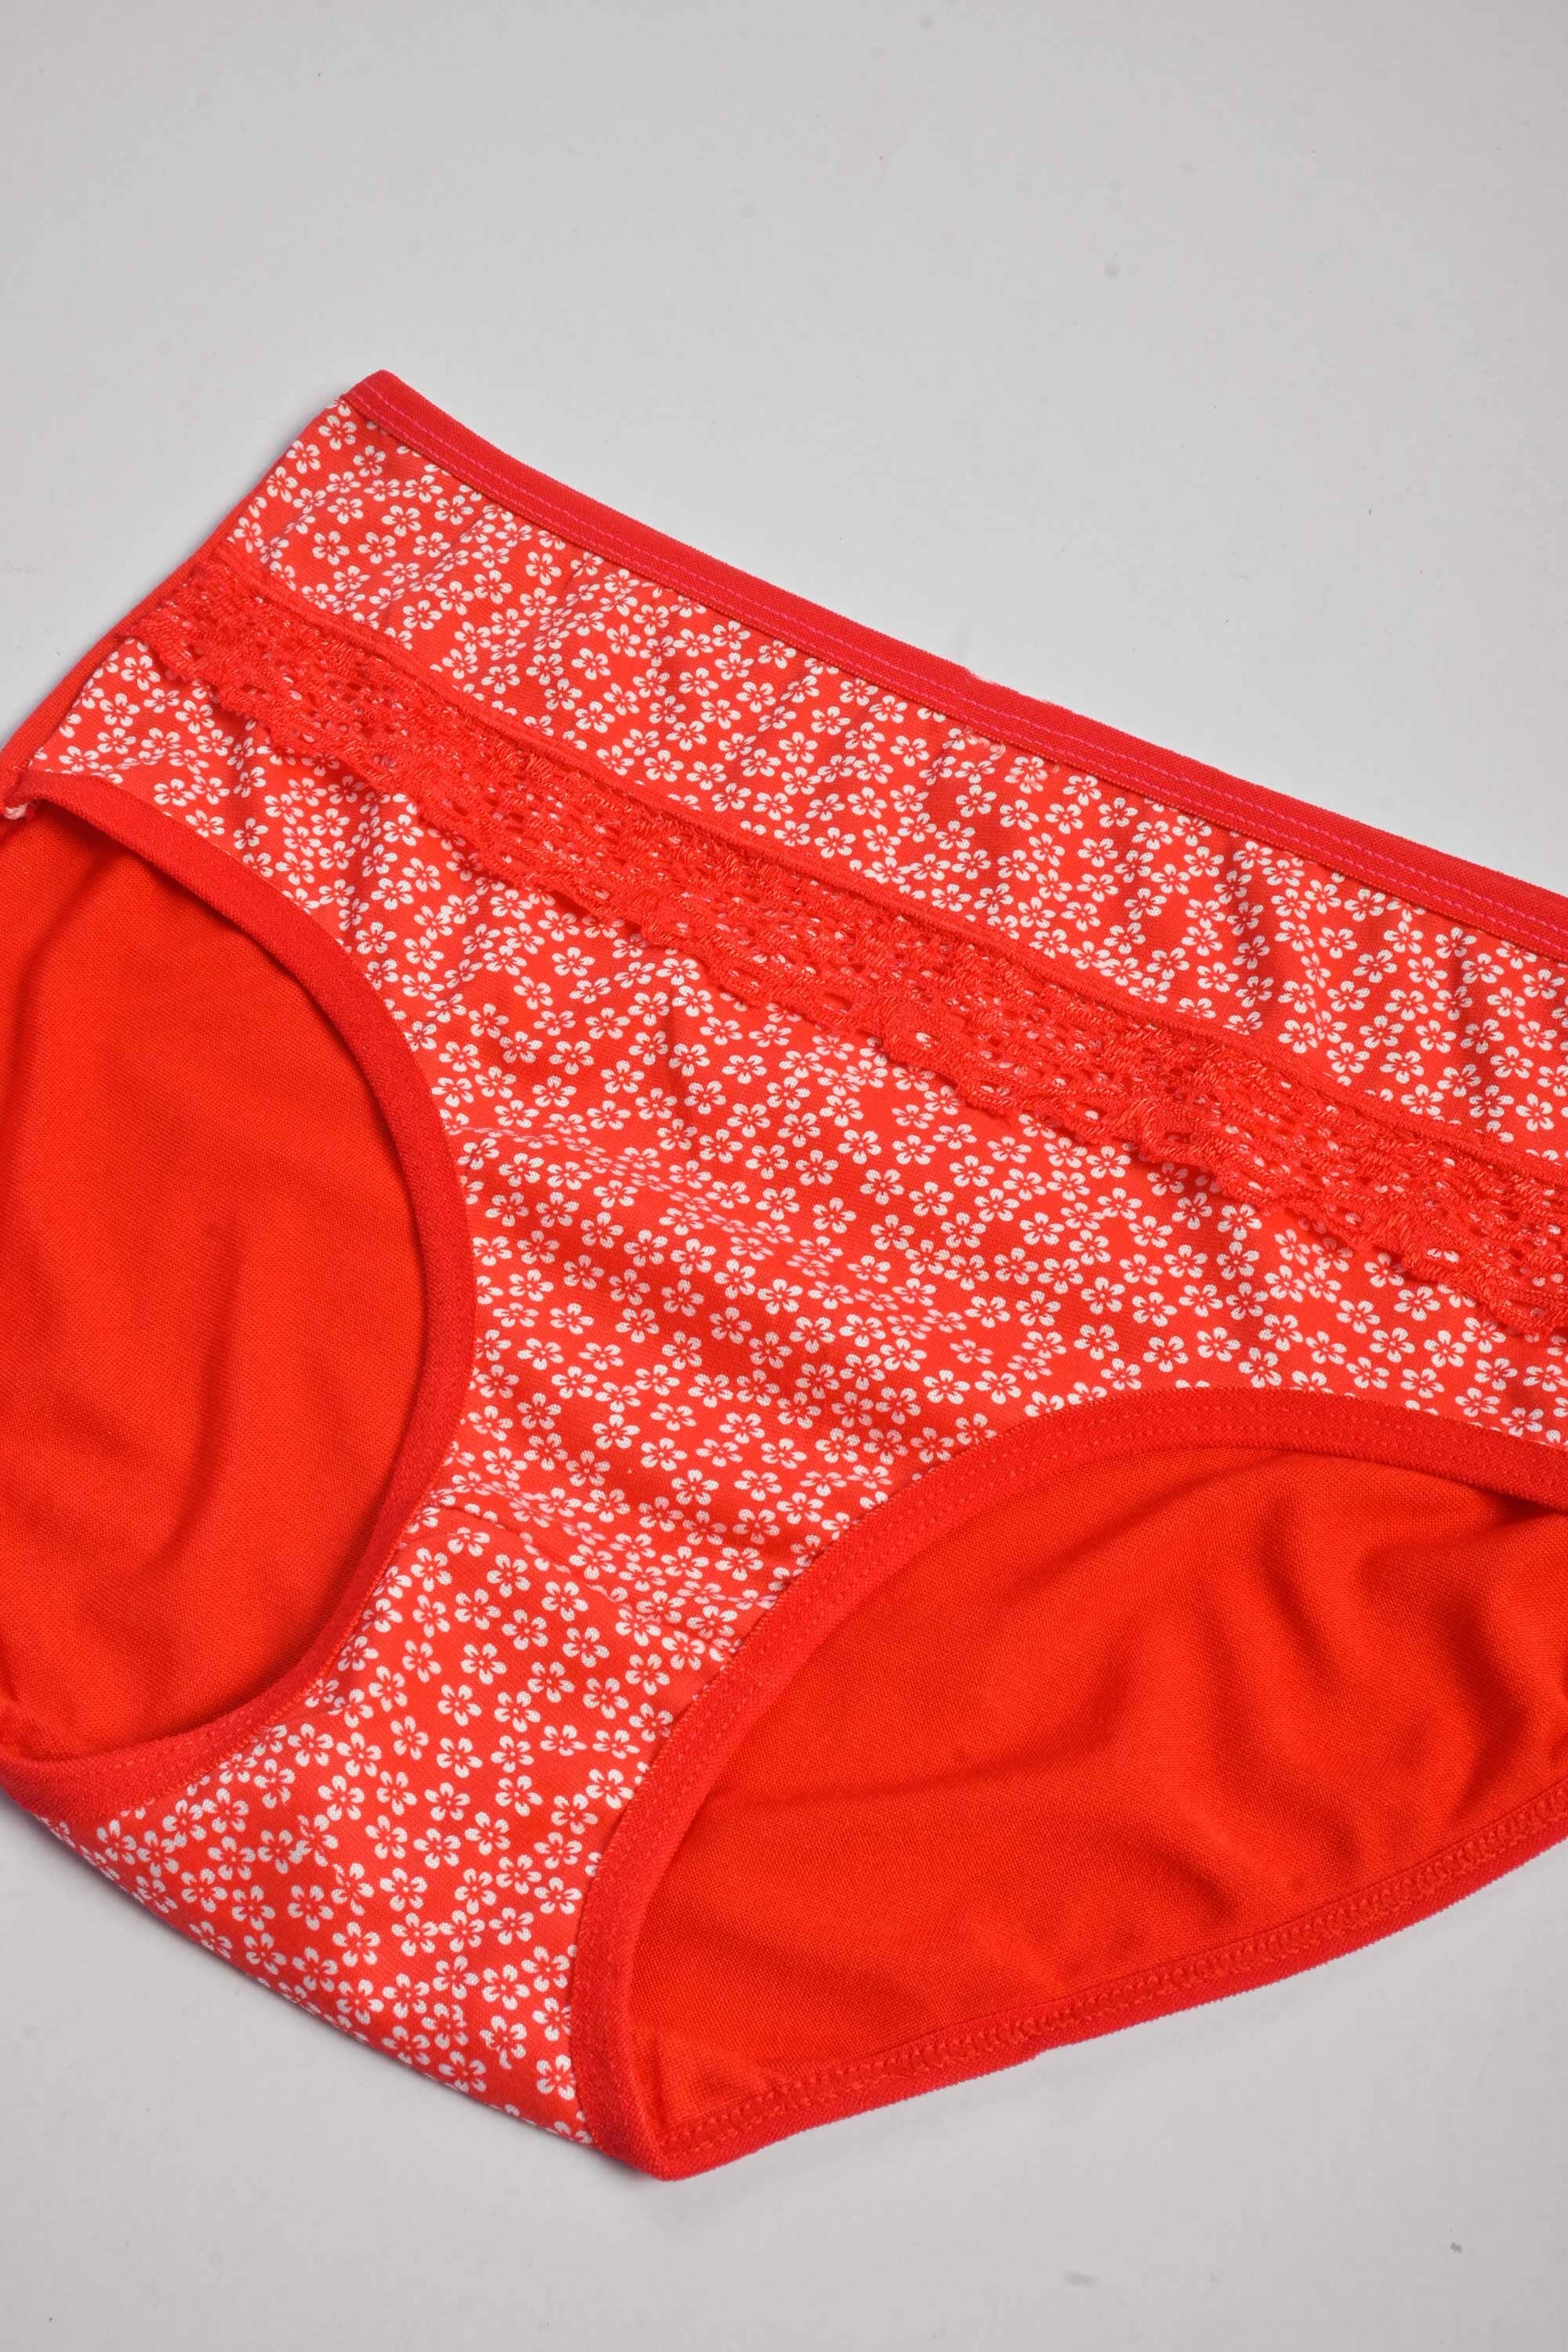 Yindanya Women's Floral Pattern Underwear Panties Women's Lingerie SRL 